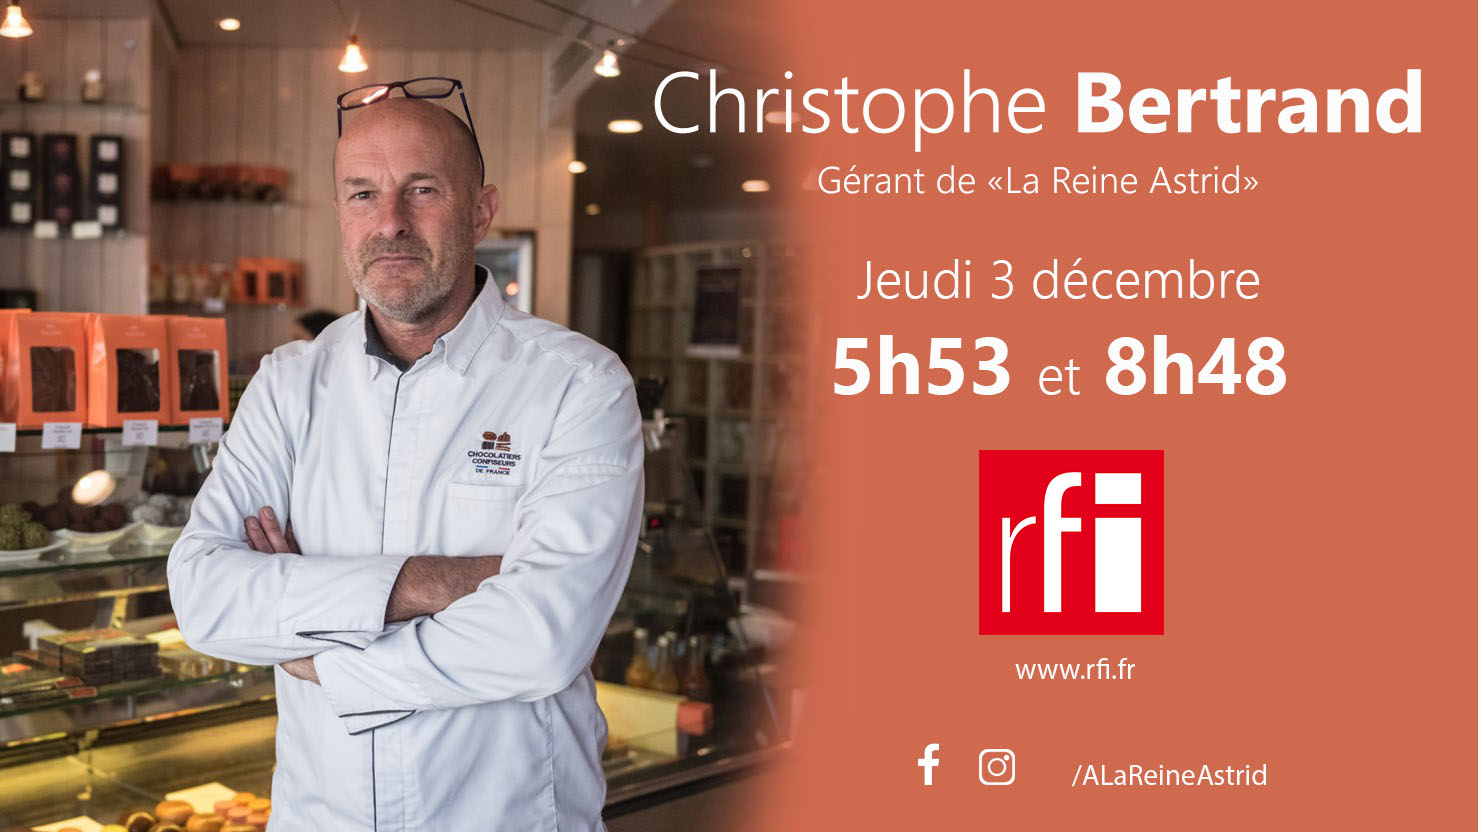 Christophe bertrand sera l'invité de RFI